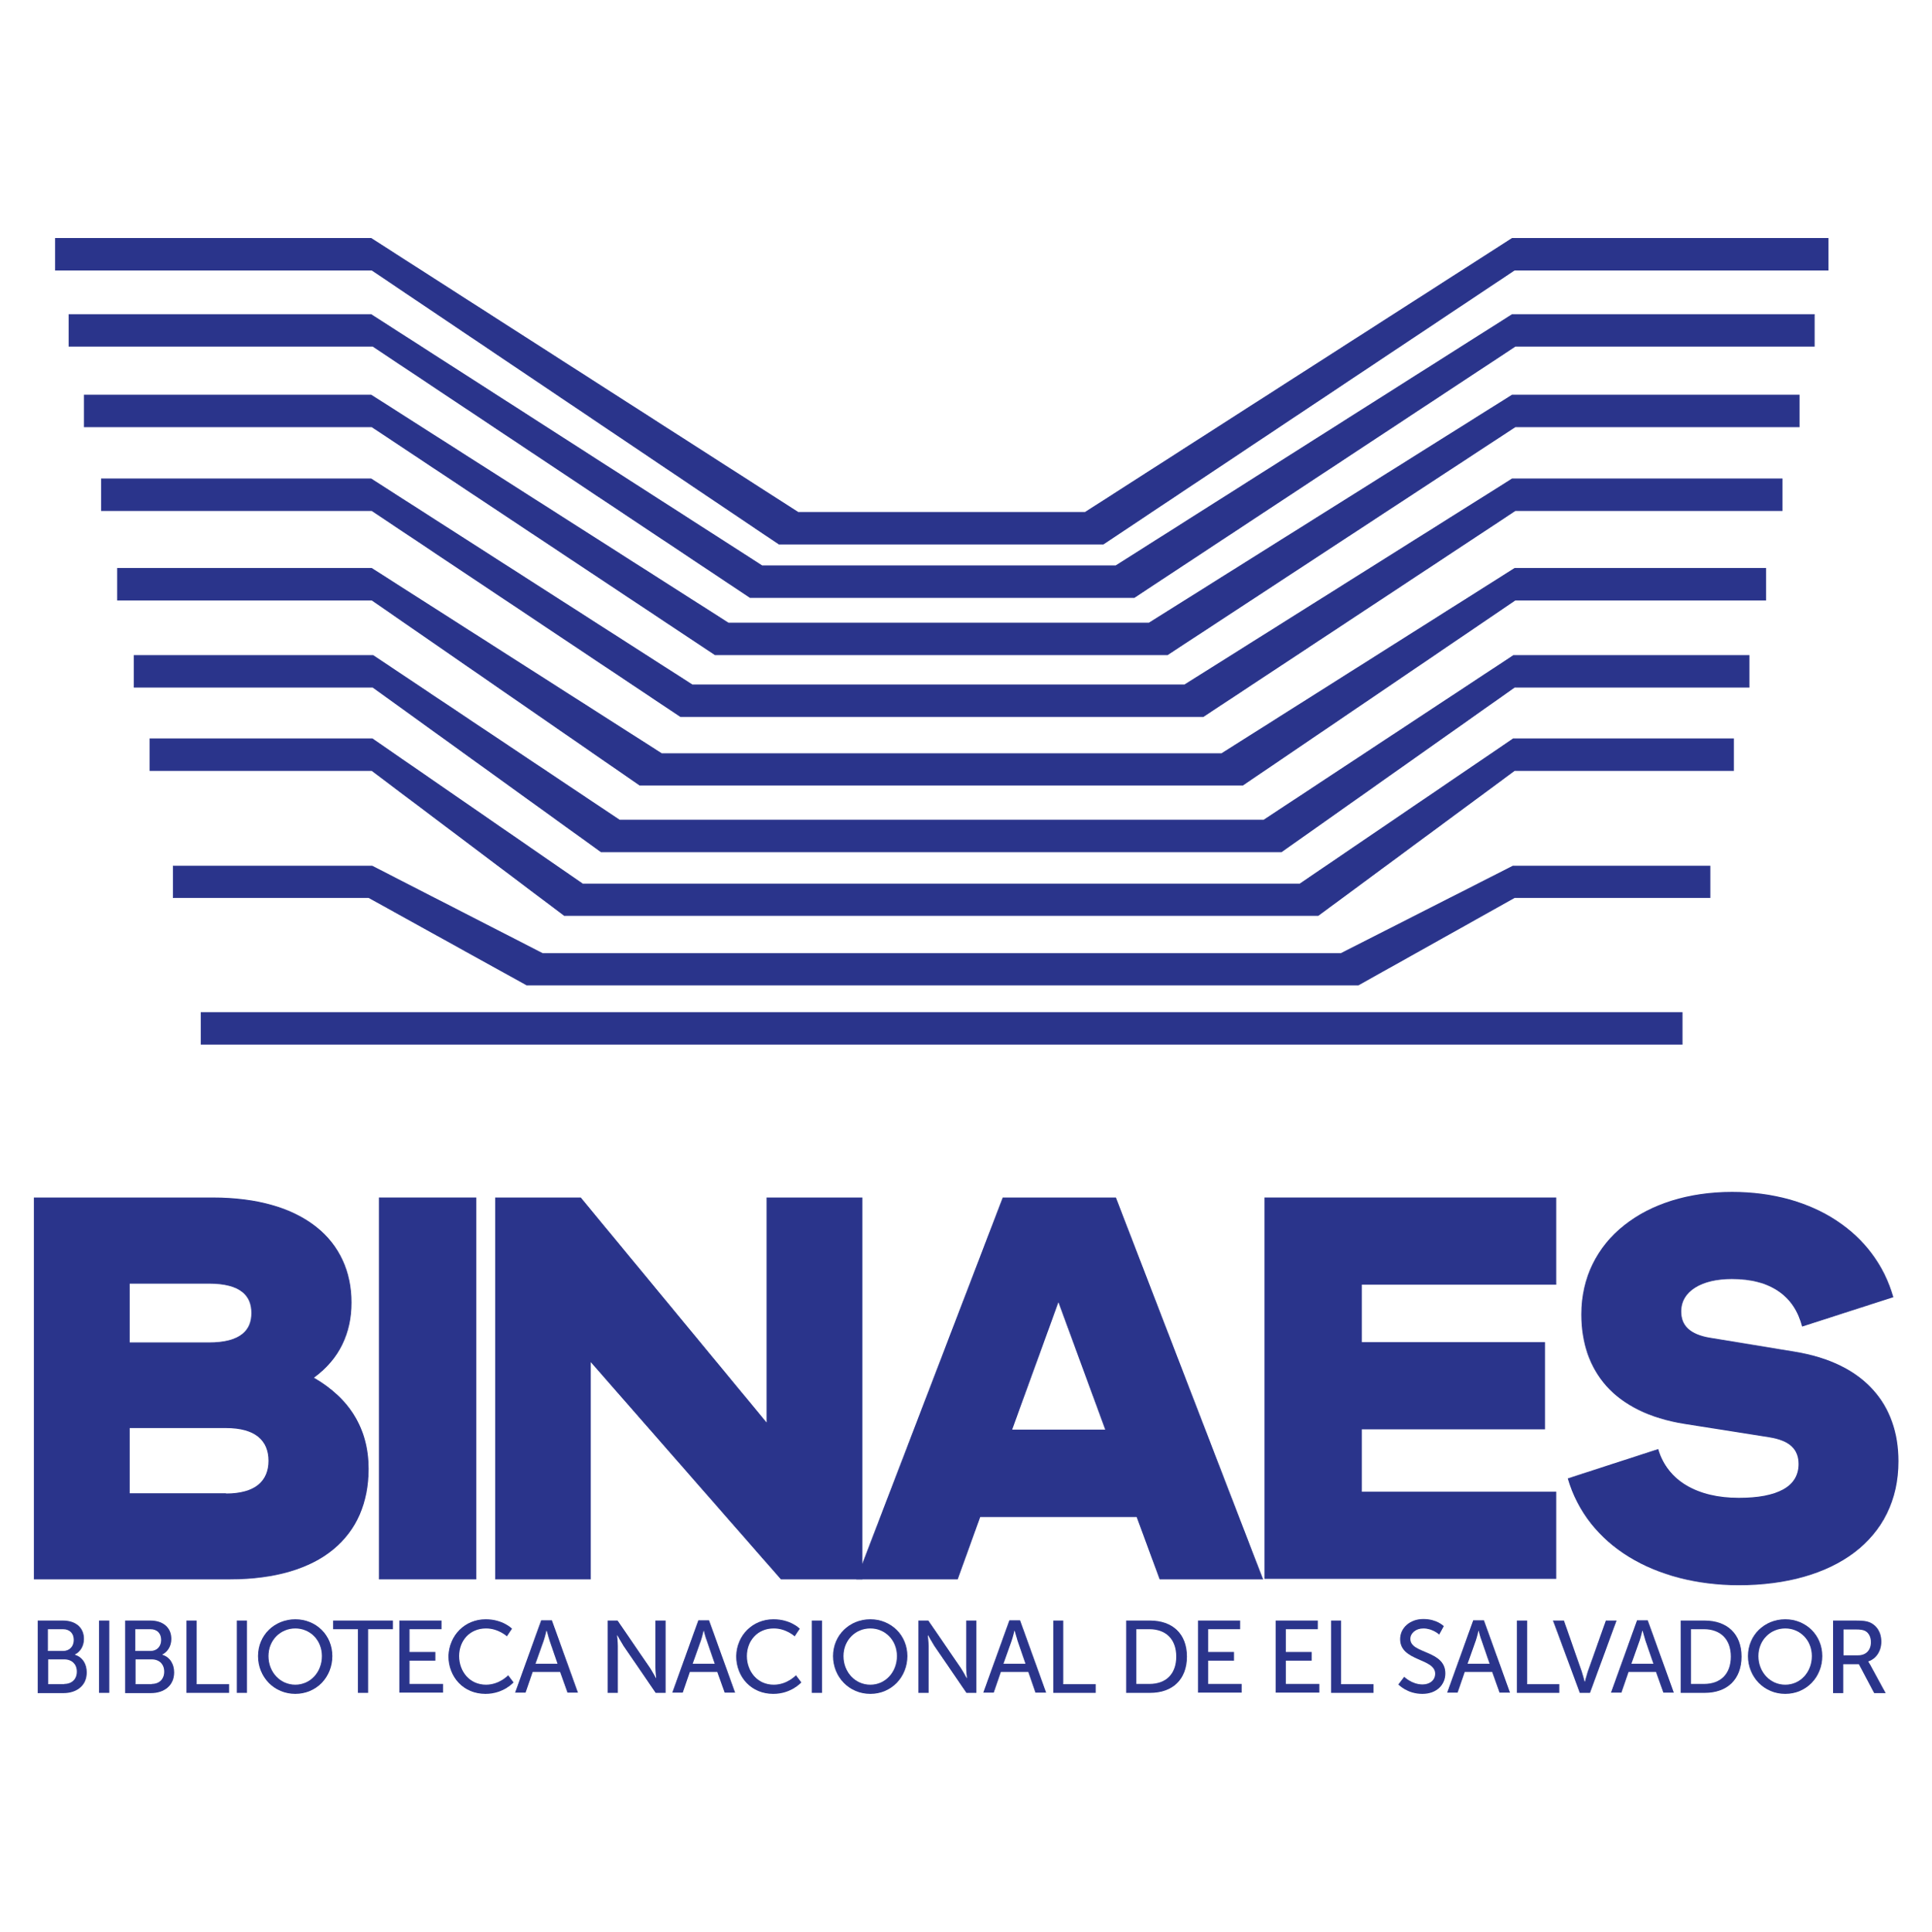 De La Biblioteca Nacional De El Salvador Logo  Transparent Image